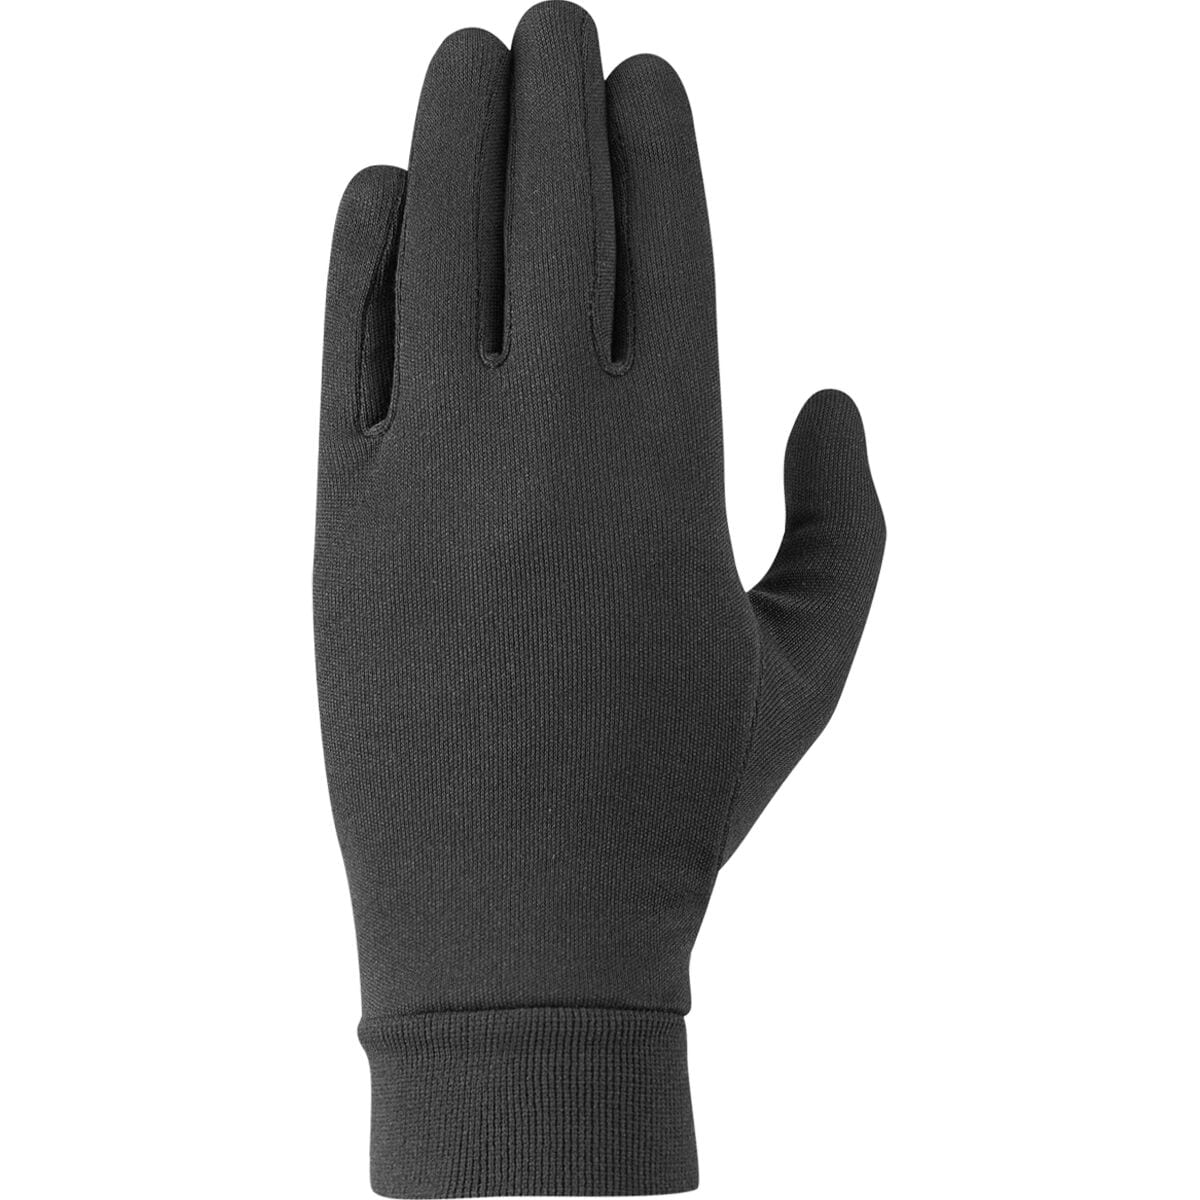 Rab Silkwarm Glove - Men's